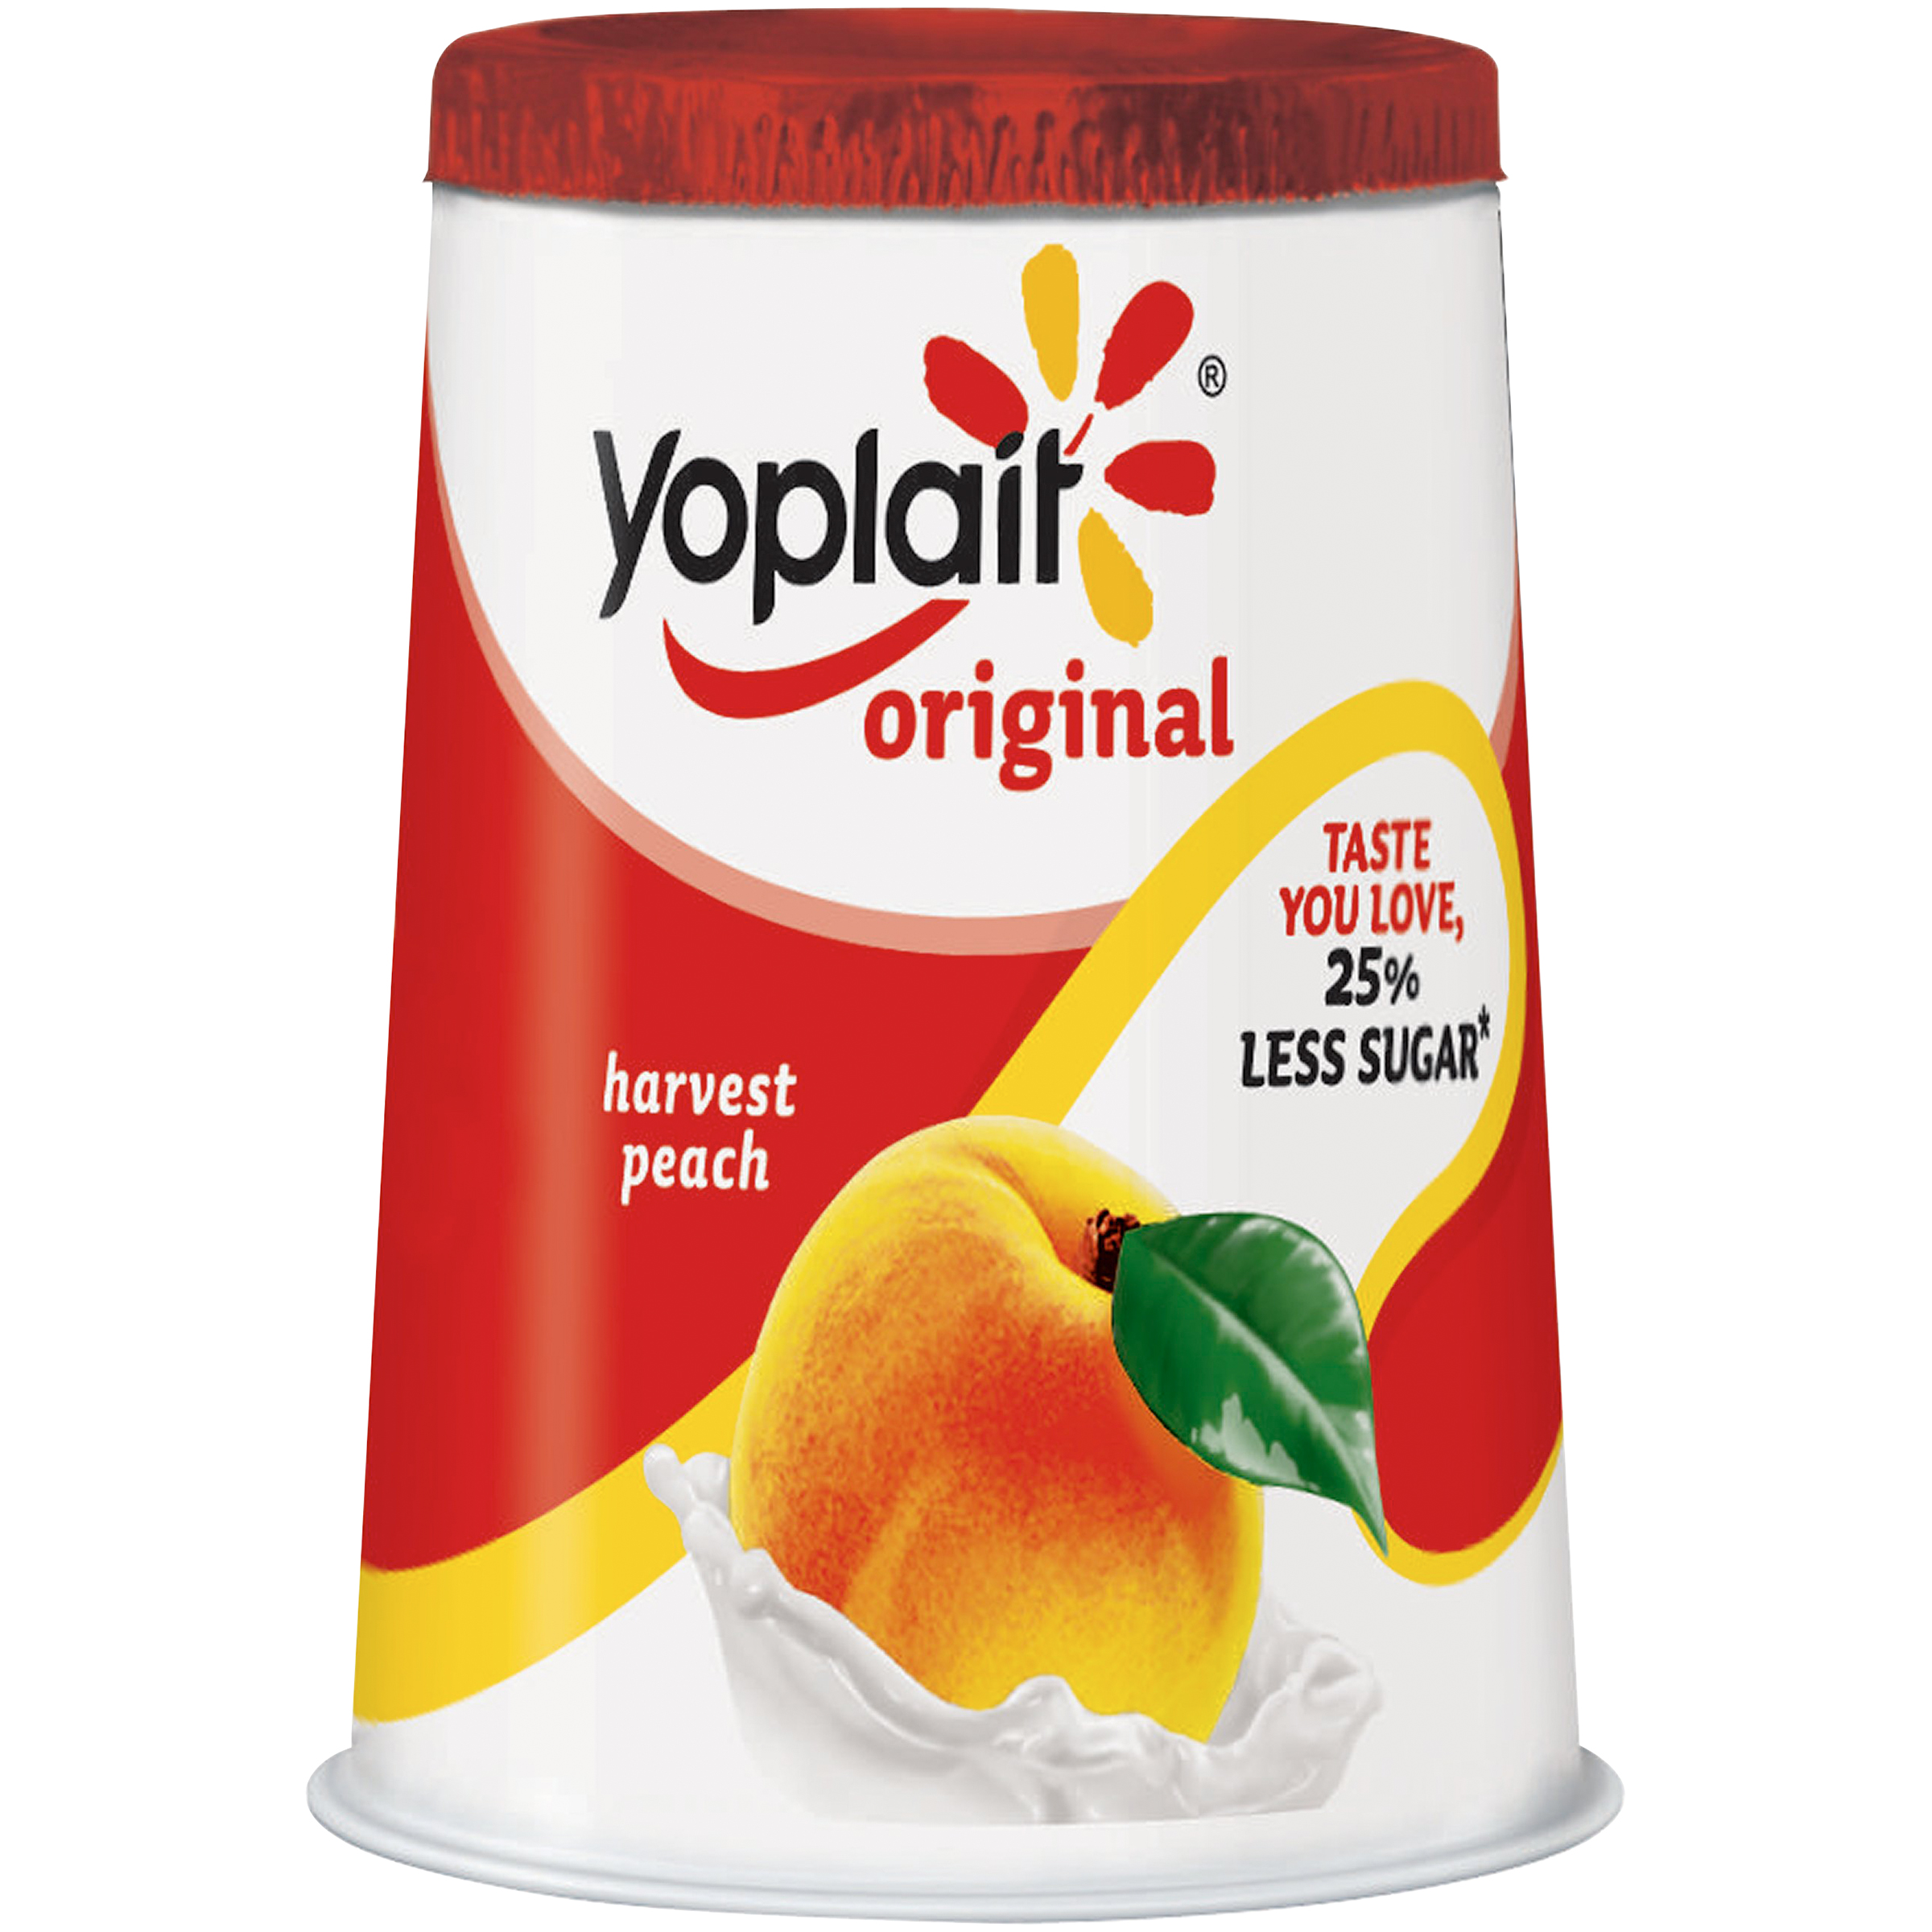 UPC 070470003078 product image for Original Harvest Peach Low Fat Yogurt | upcitemdb.com